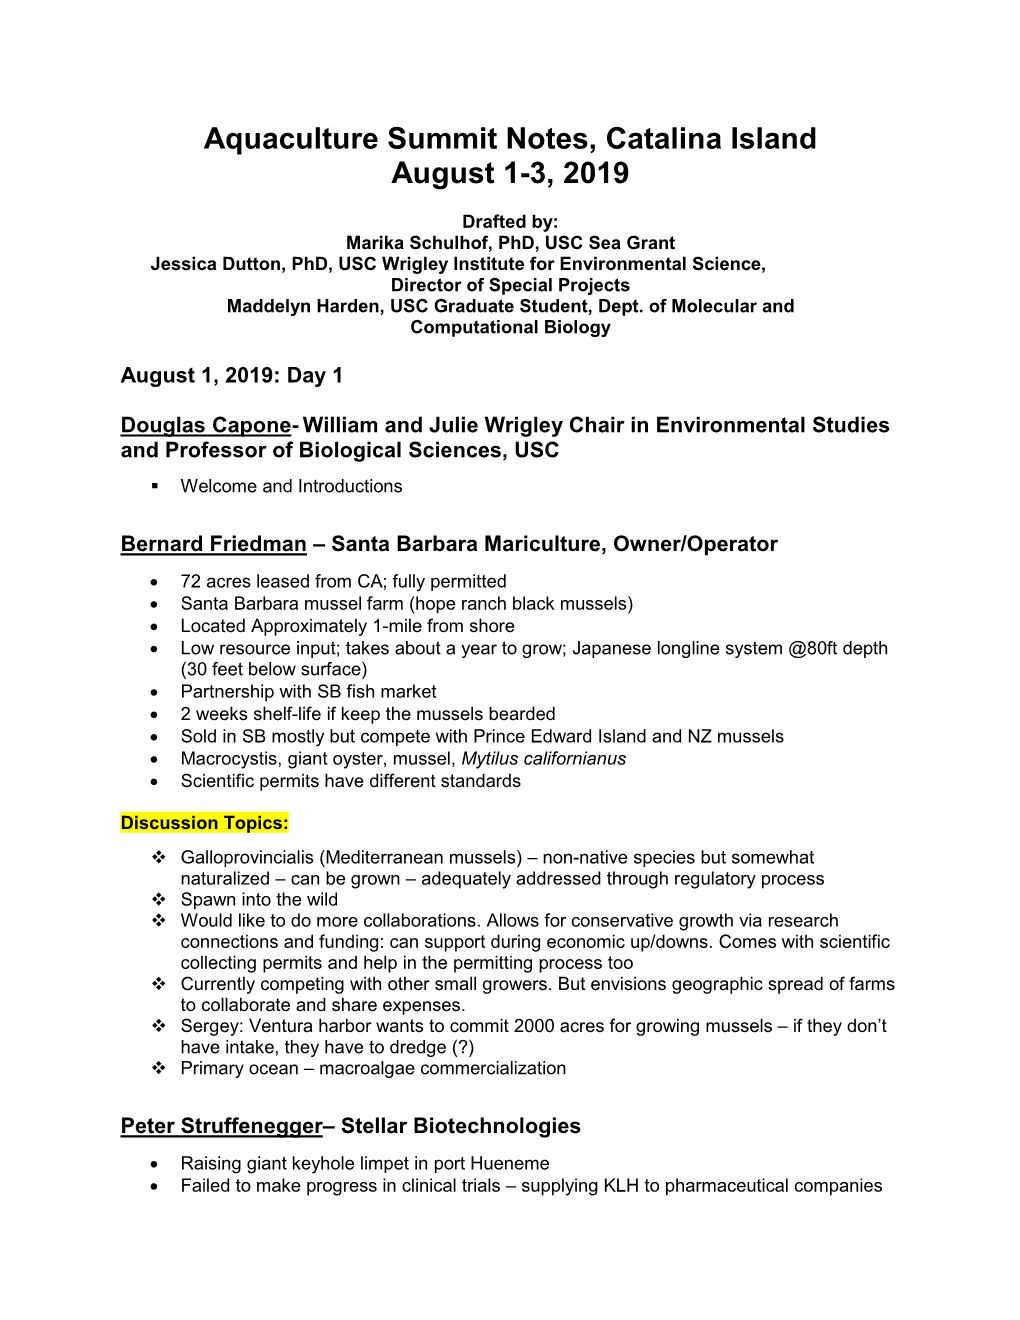 Aquaculture Summit Notes, Catalina Island August 1-3, 2019